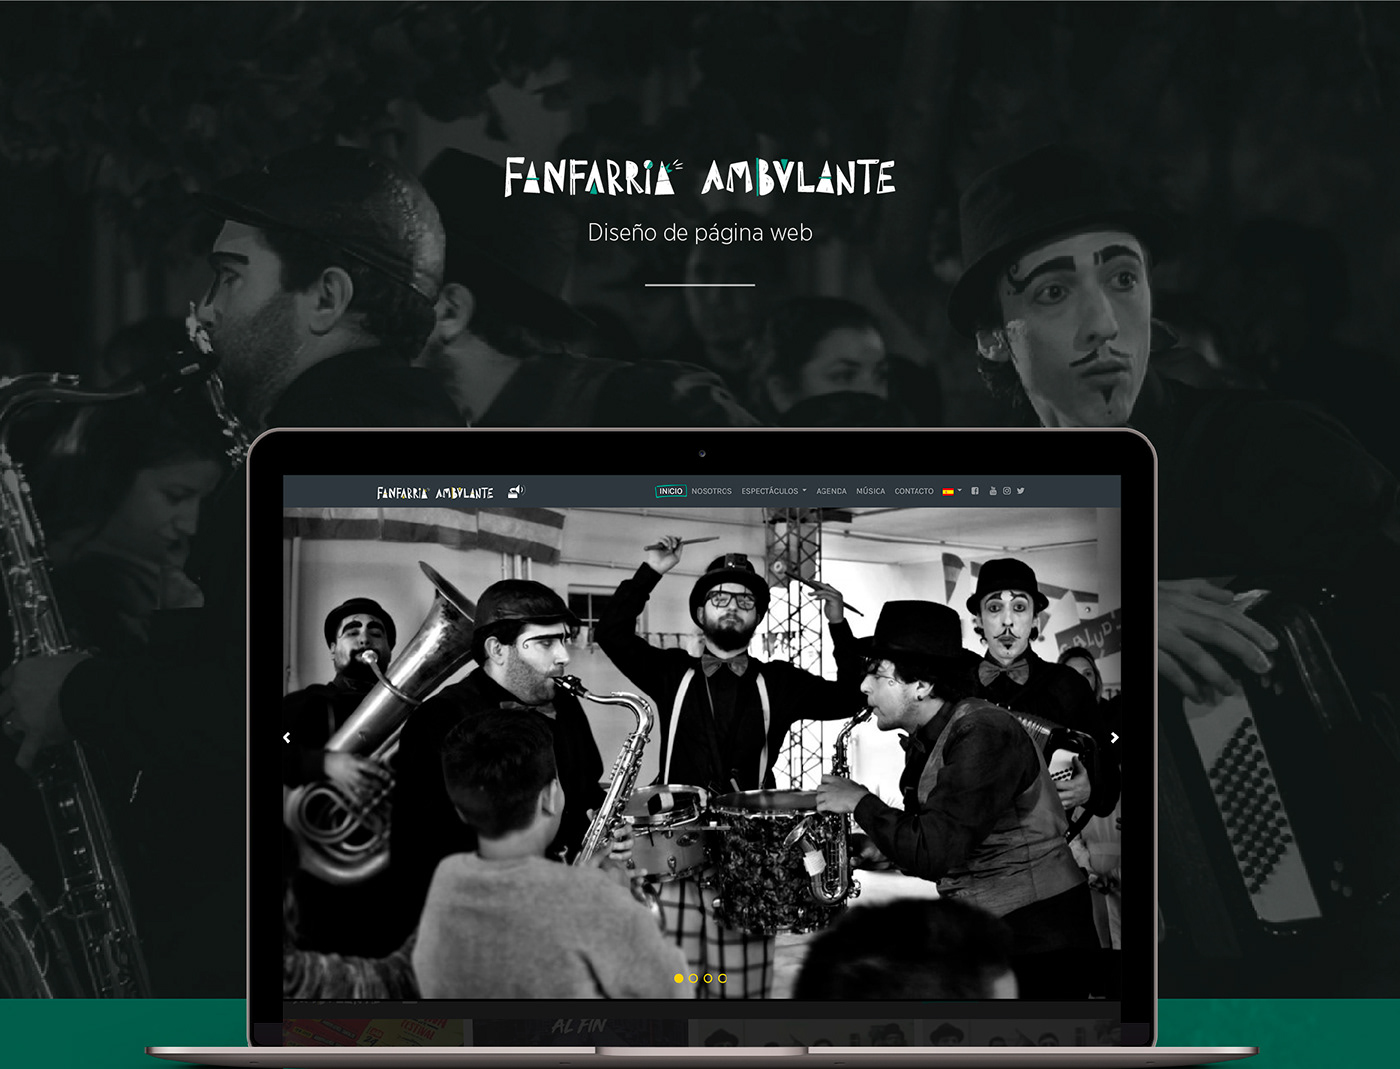 Fanfarria  music Ambulante juego fanfare Webdesign Web